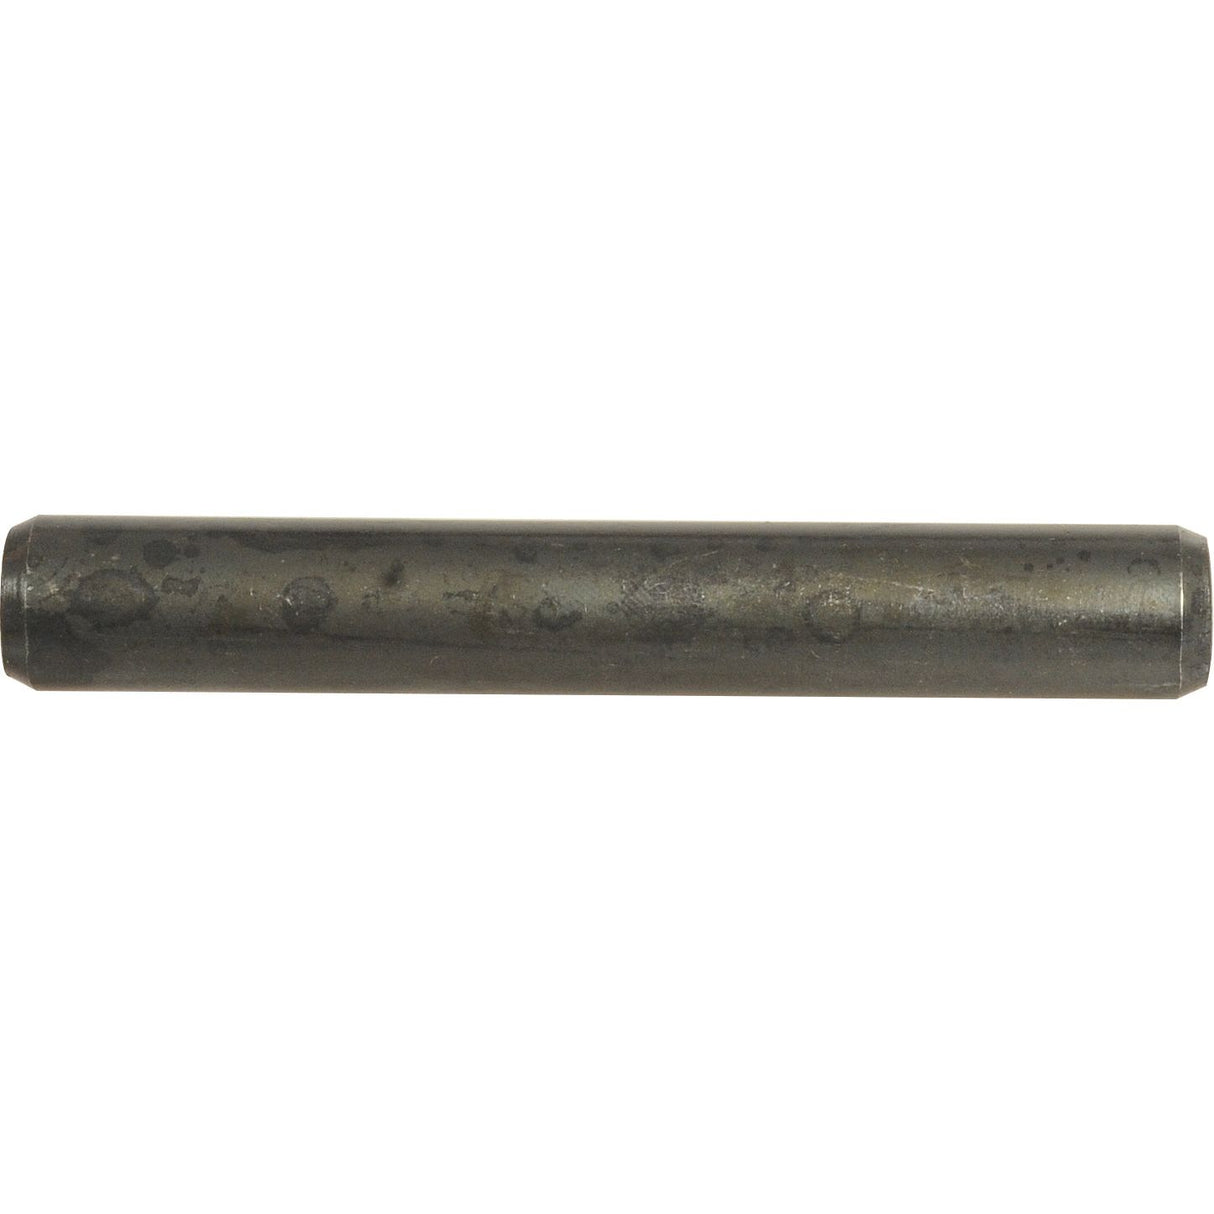 Metric Roll Pin, Pin⌀11mm x 90mm
 - S.11479 - Farming Parts